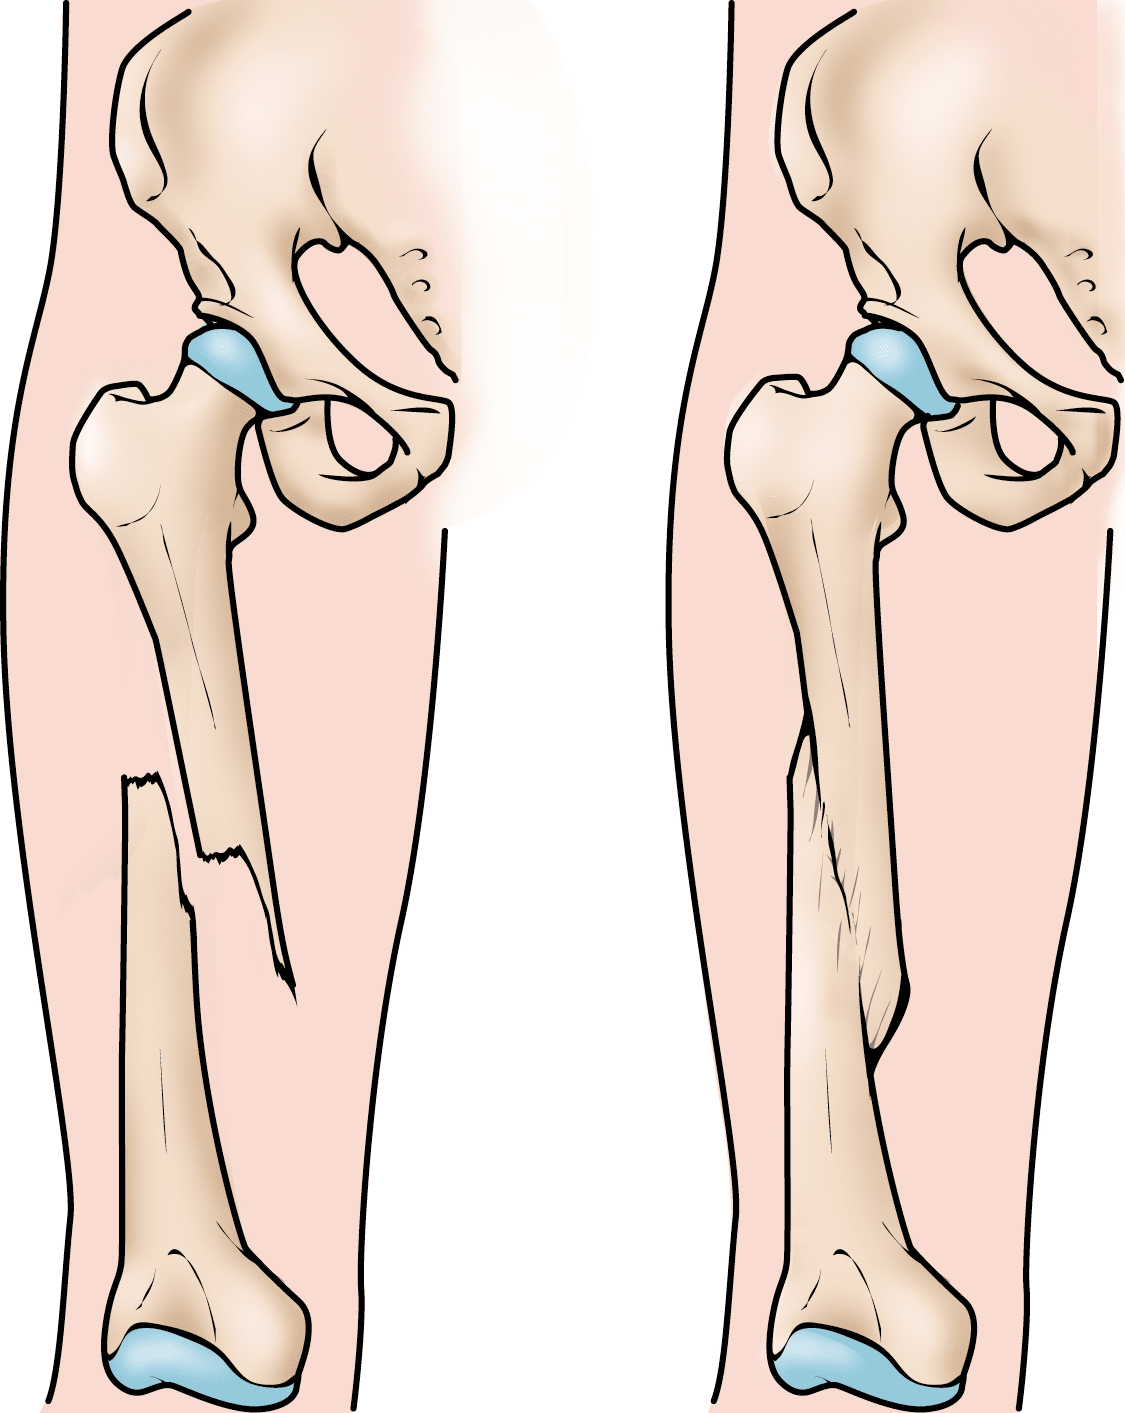 Femur (thighbone) fracture remodeling